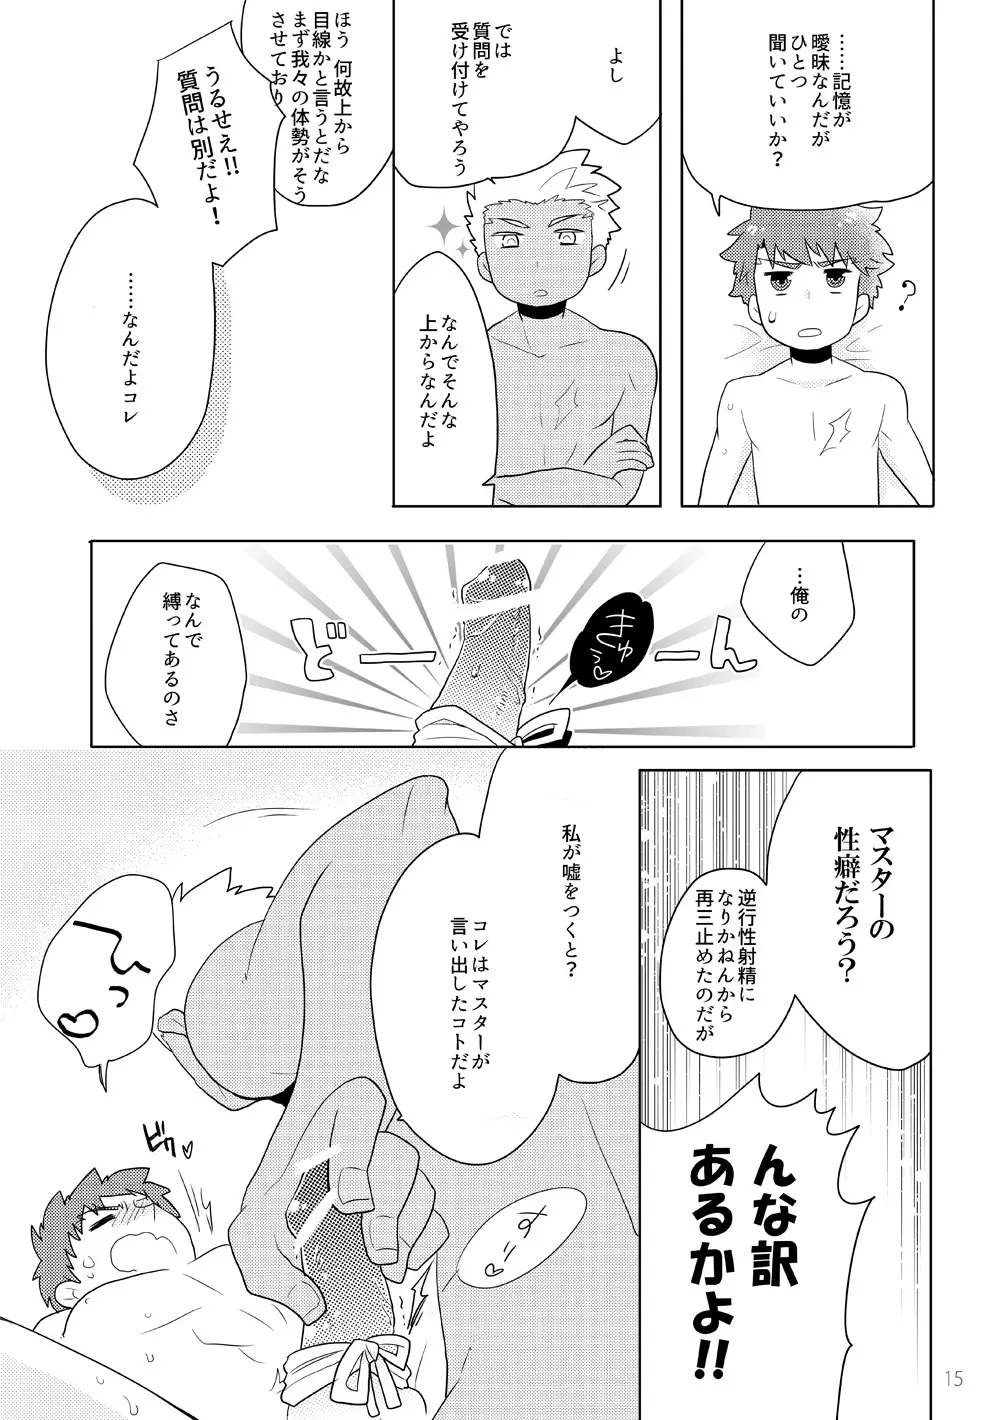 弓士本 - page77